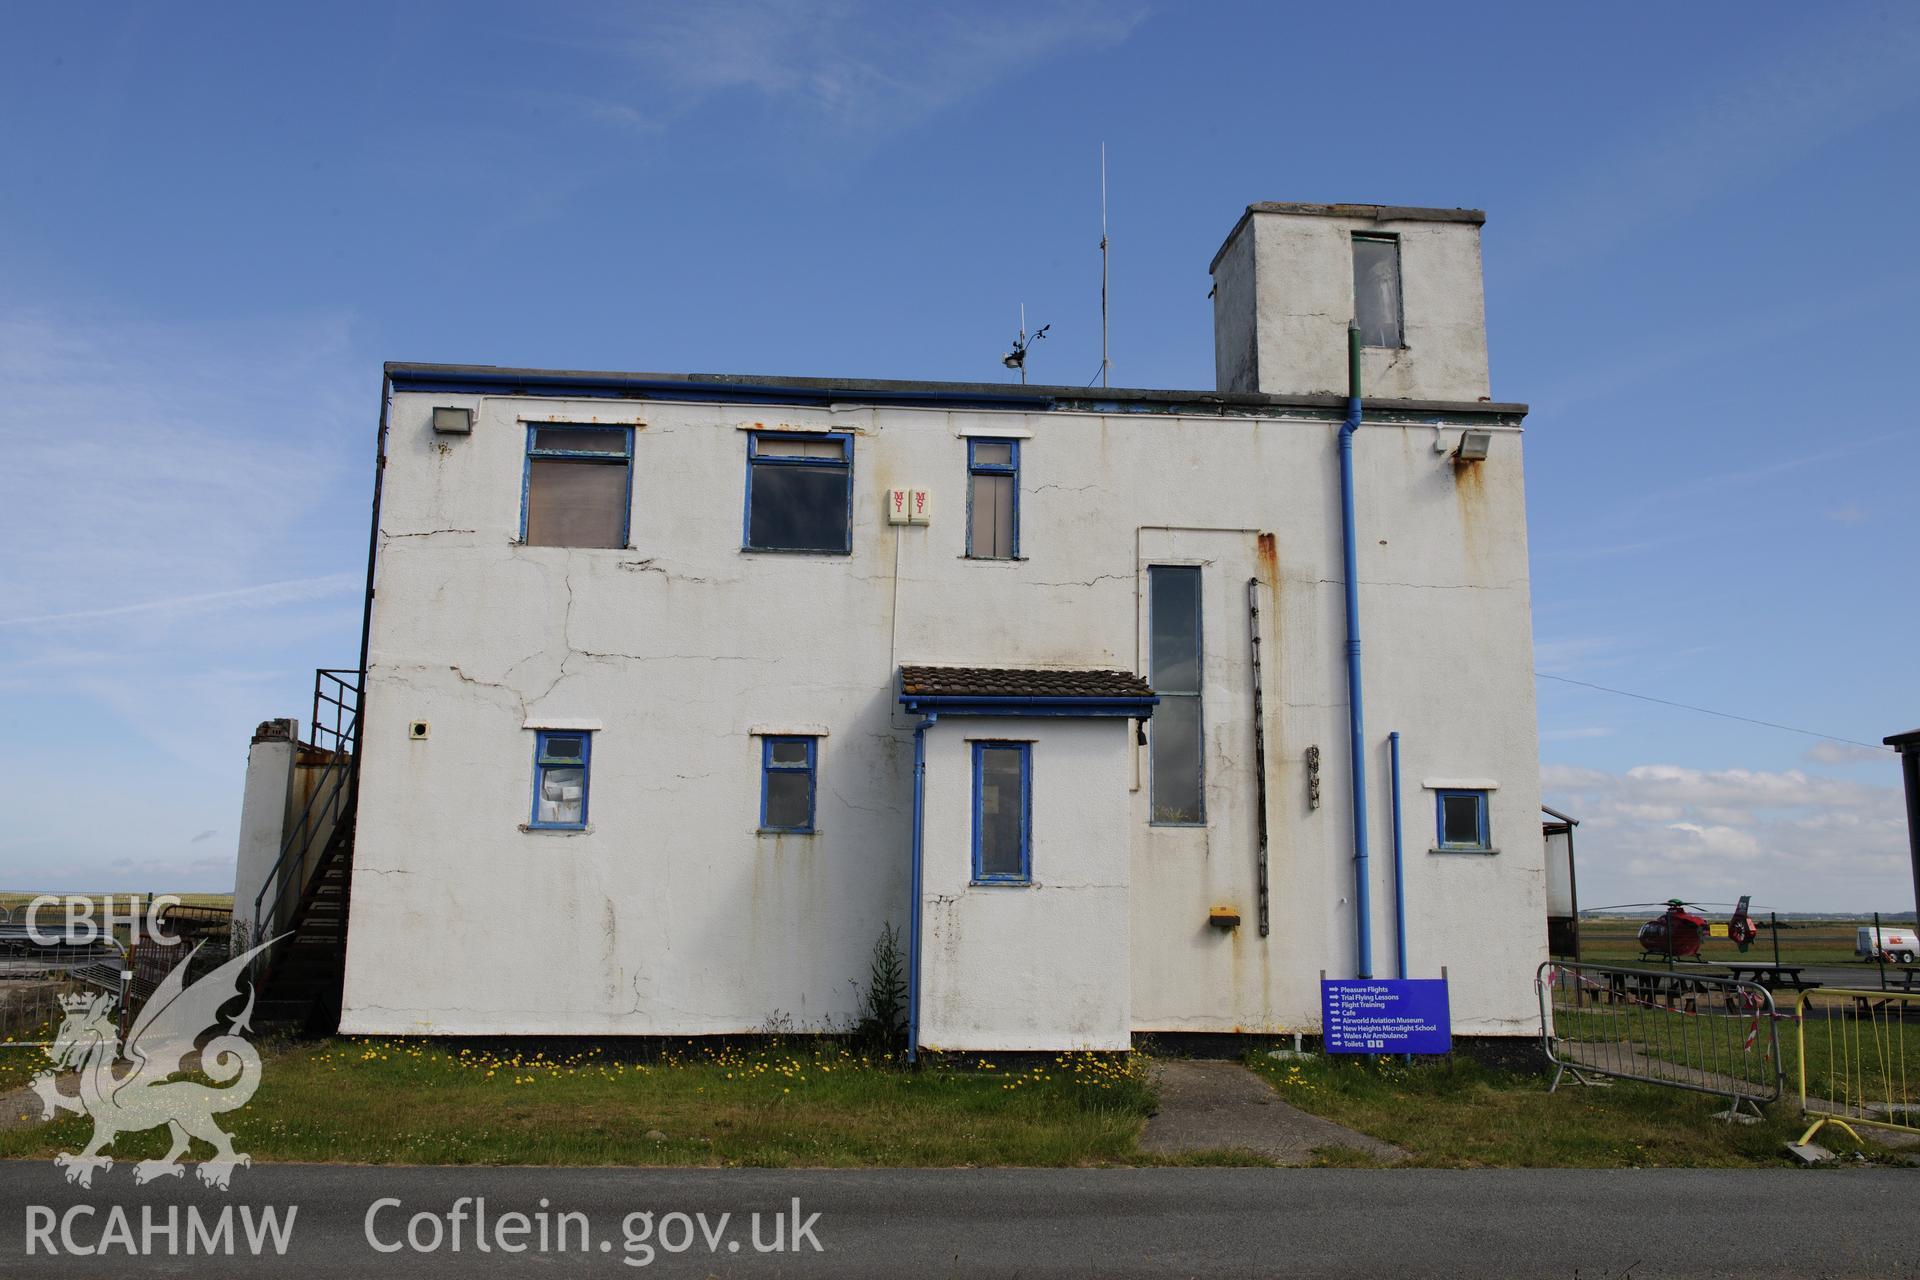 RAF Llandwrog, Caernarfon. Control Tower. External photographic survey prior to demolition.